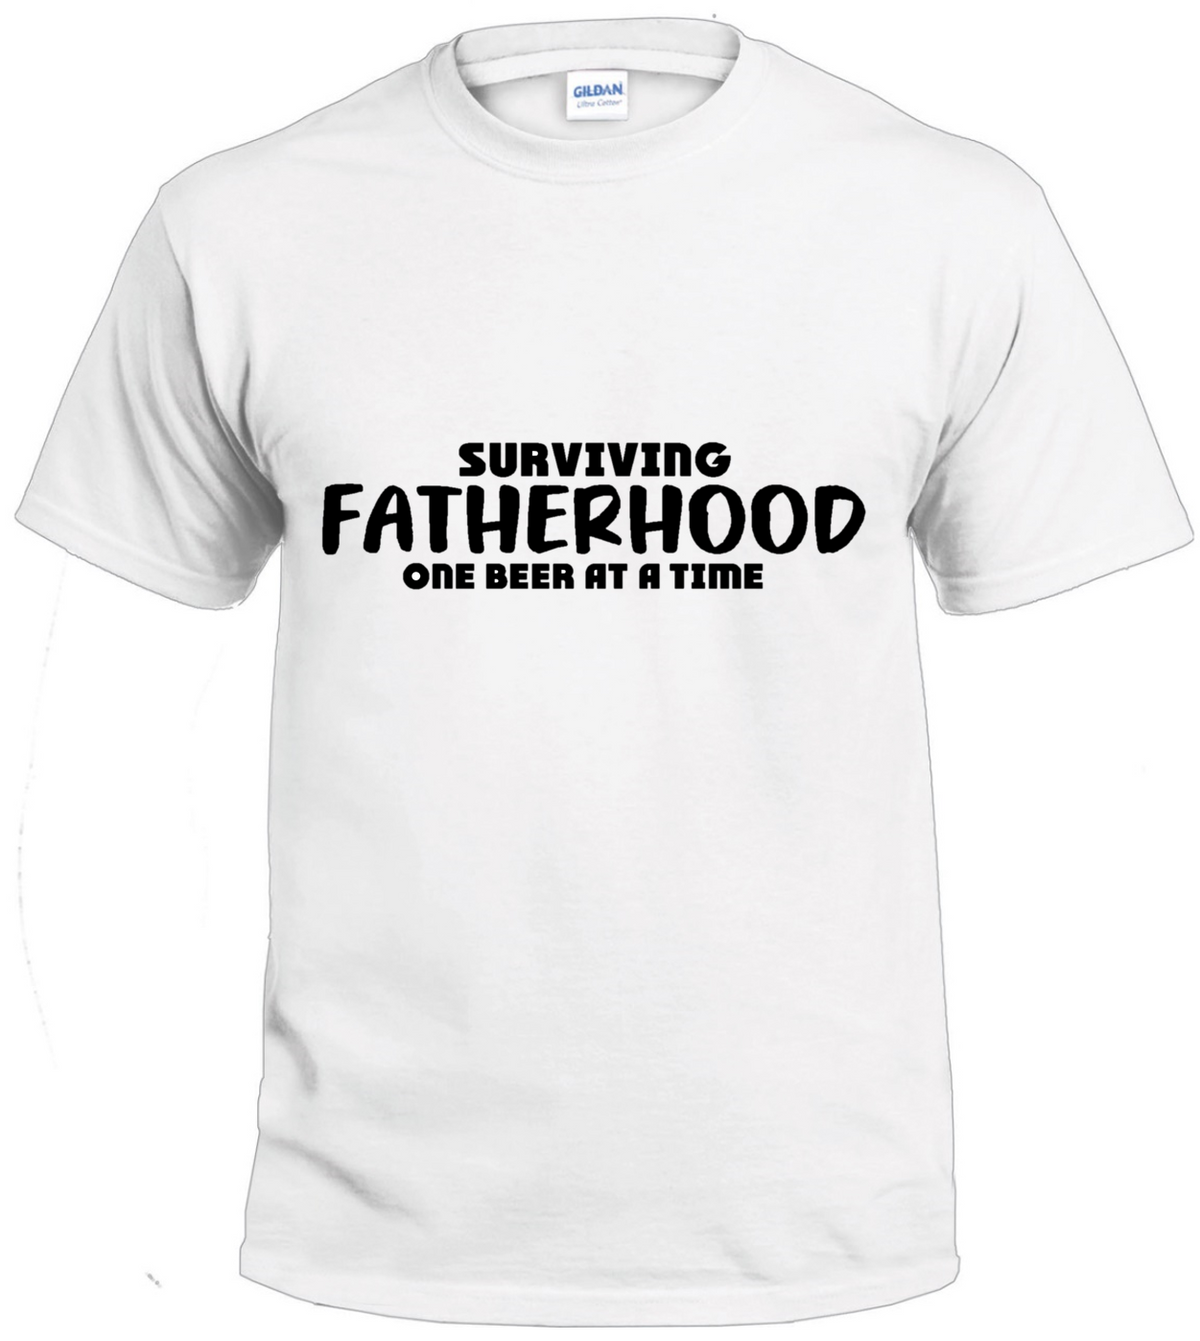 Surviving Fatherhood t-shirt